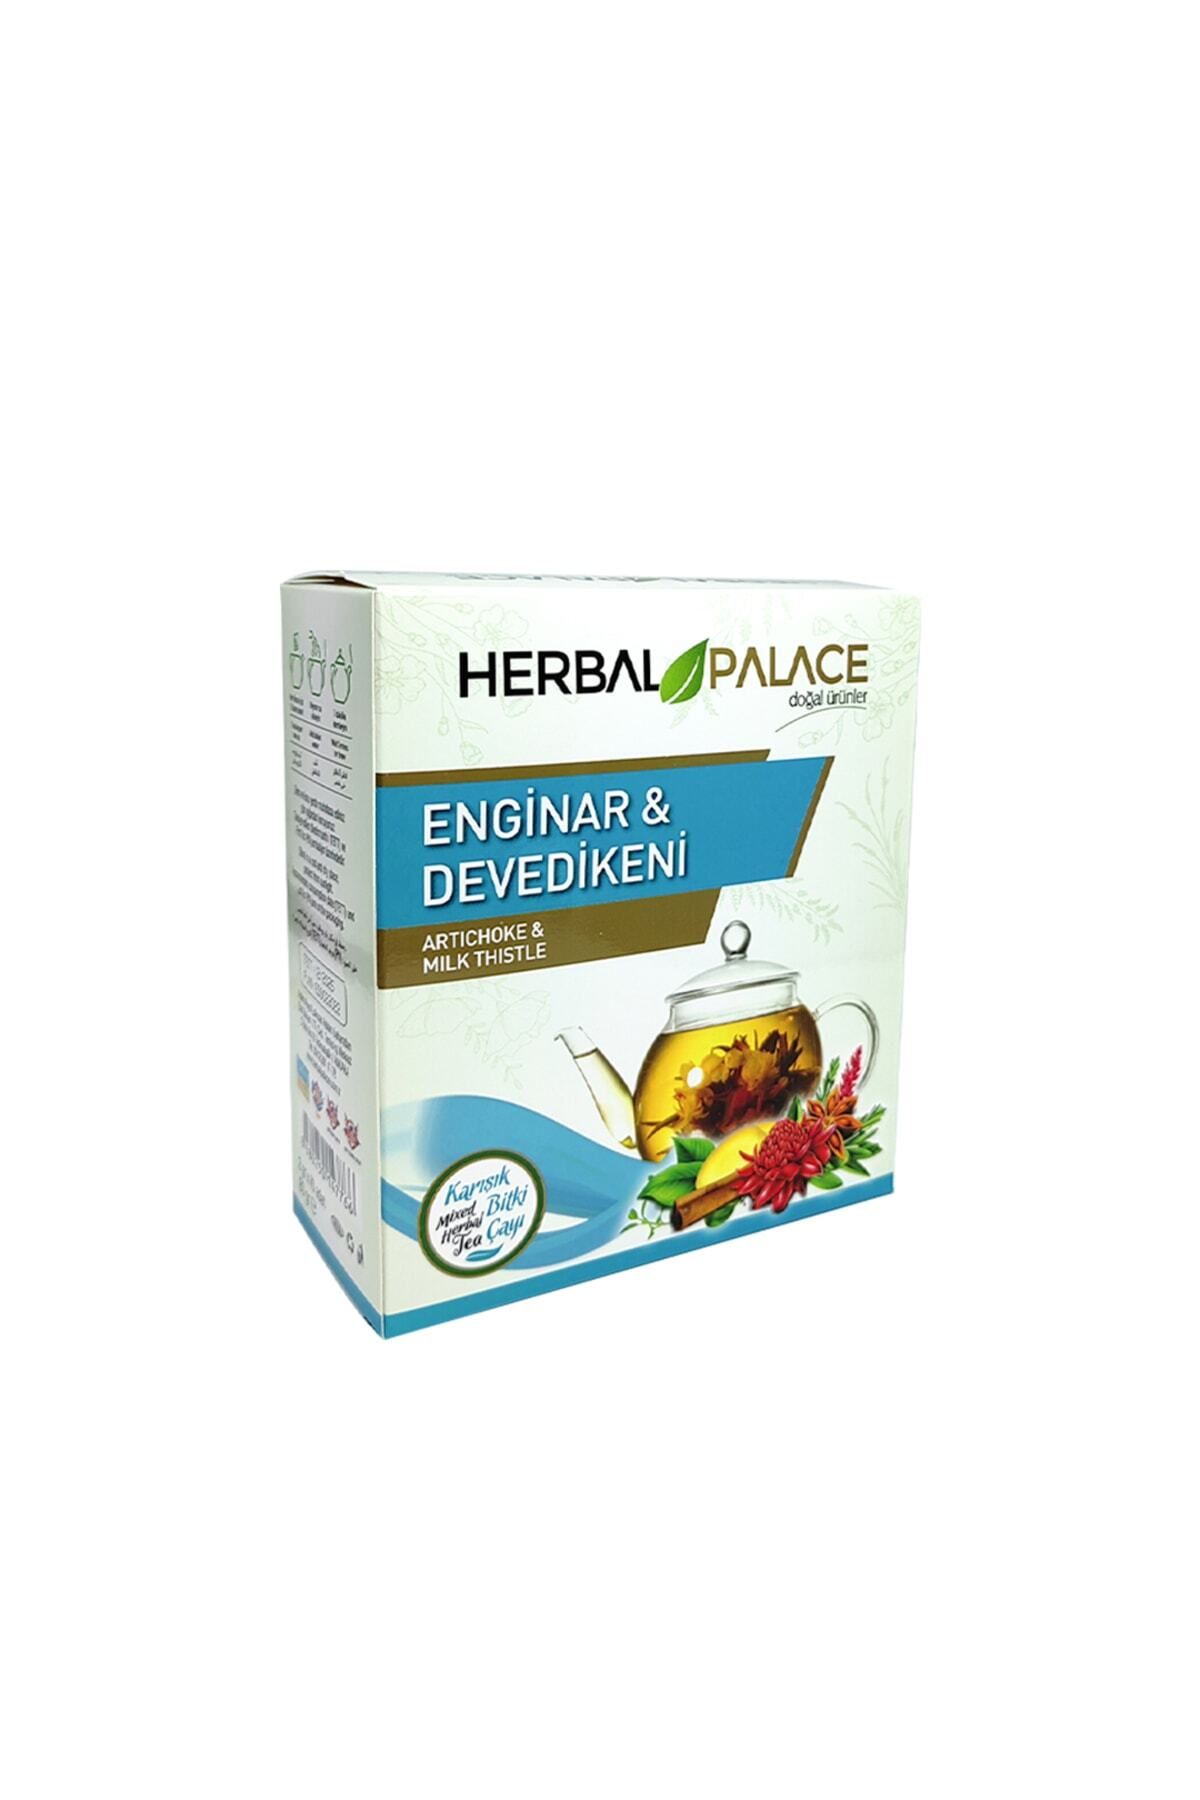 Herbal Palace ENGİNAR & DEVEDİKENİ KARIŞIM ÇAY 2 GR × 40